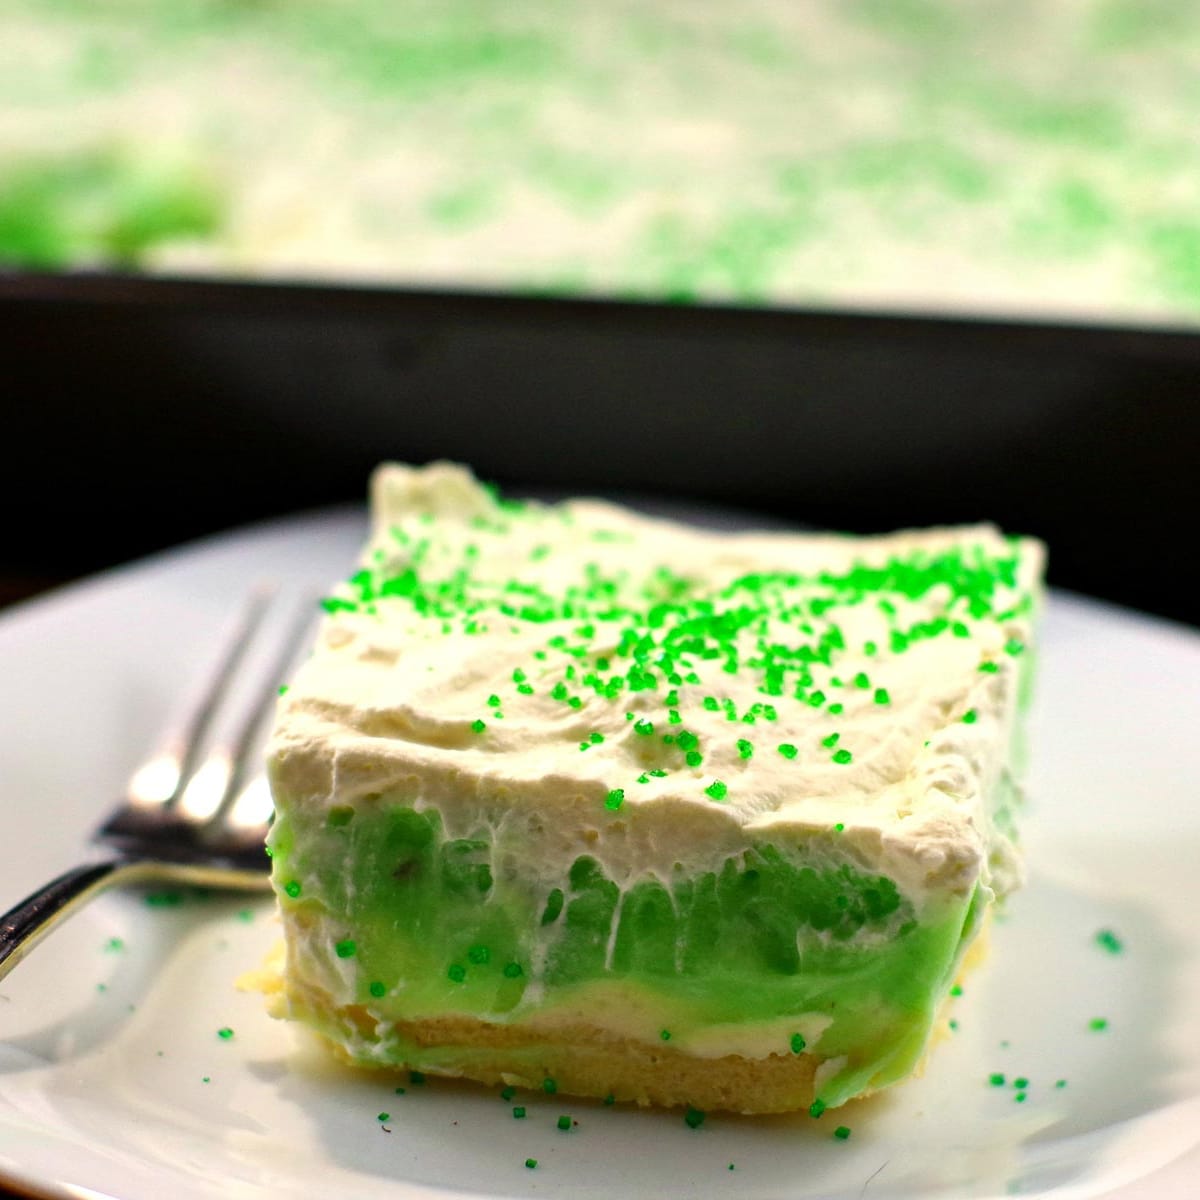 Pistachio Dessert Recipe (green dessert) - Food Meanderings